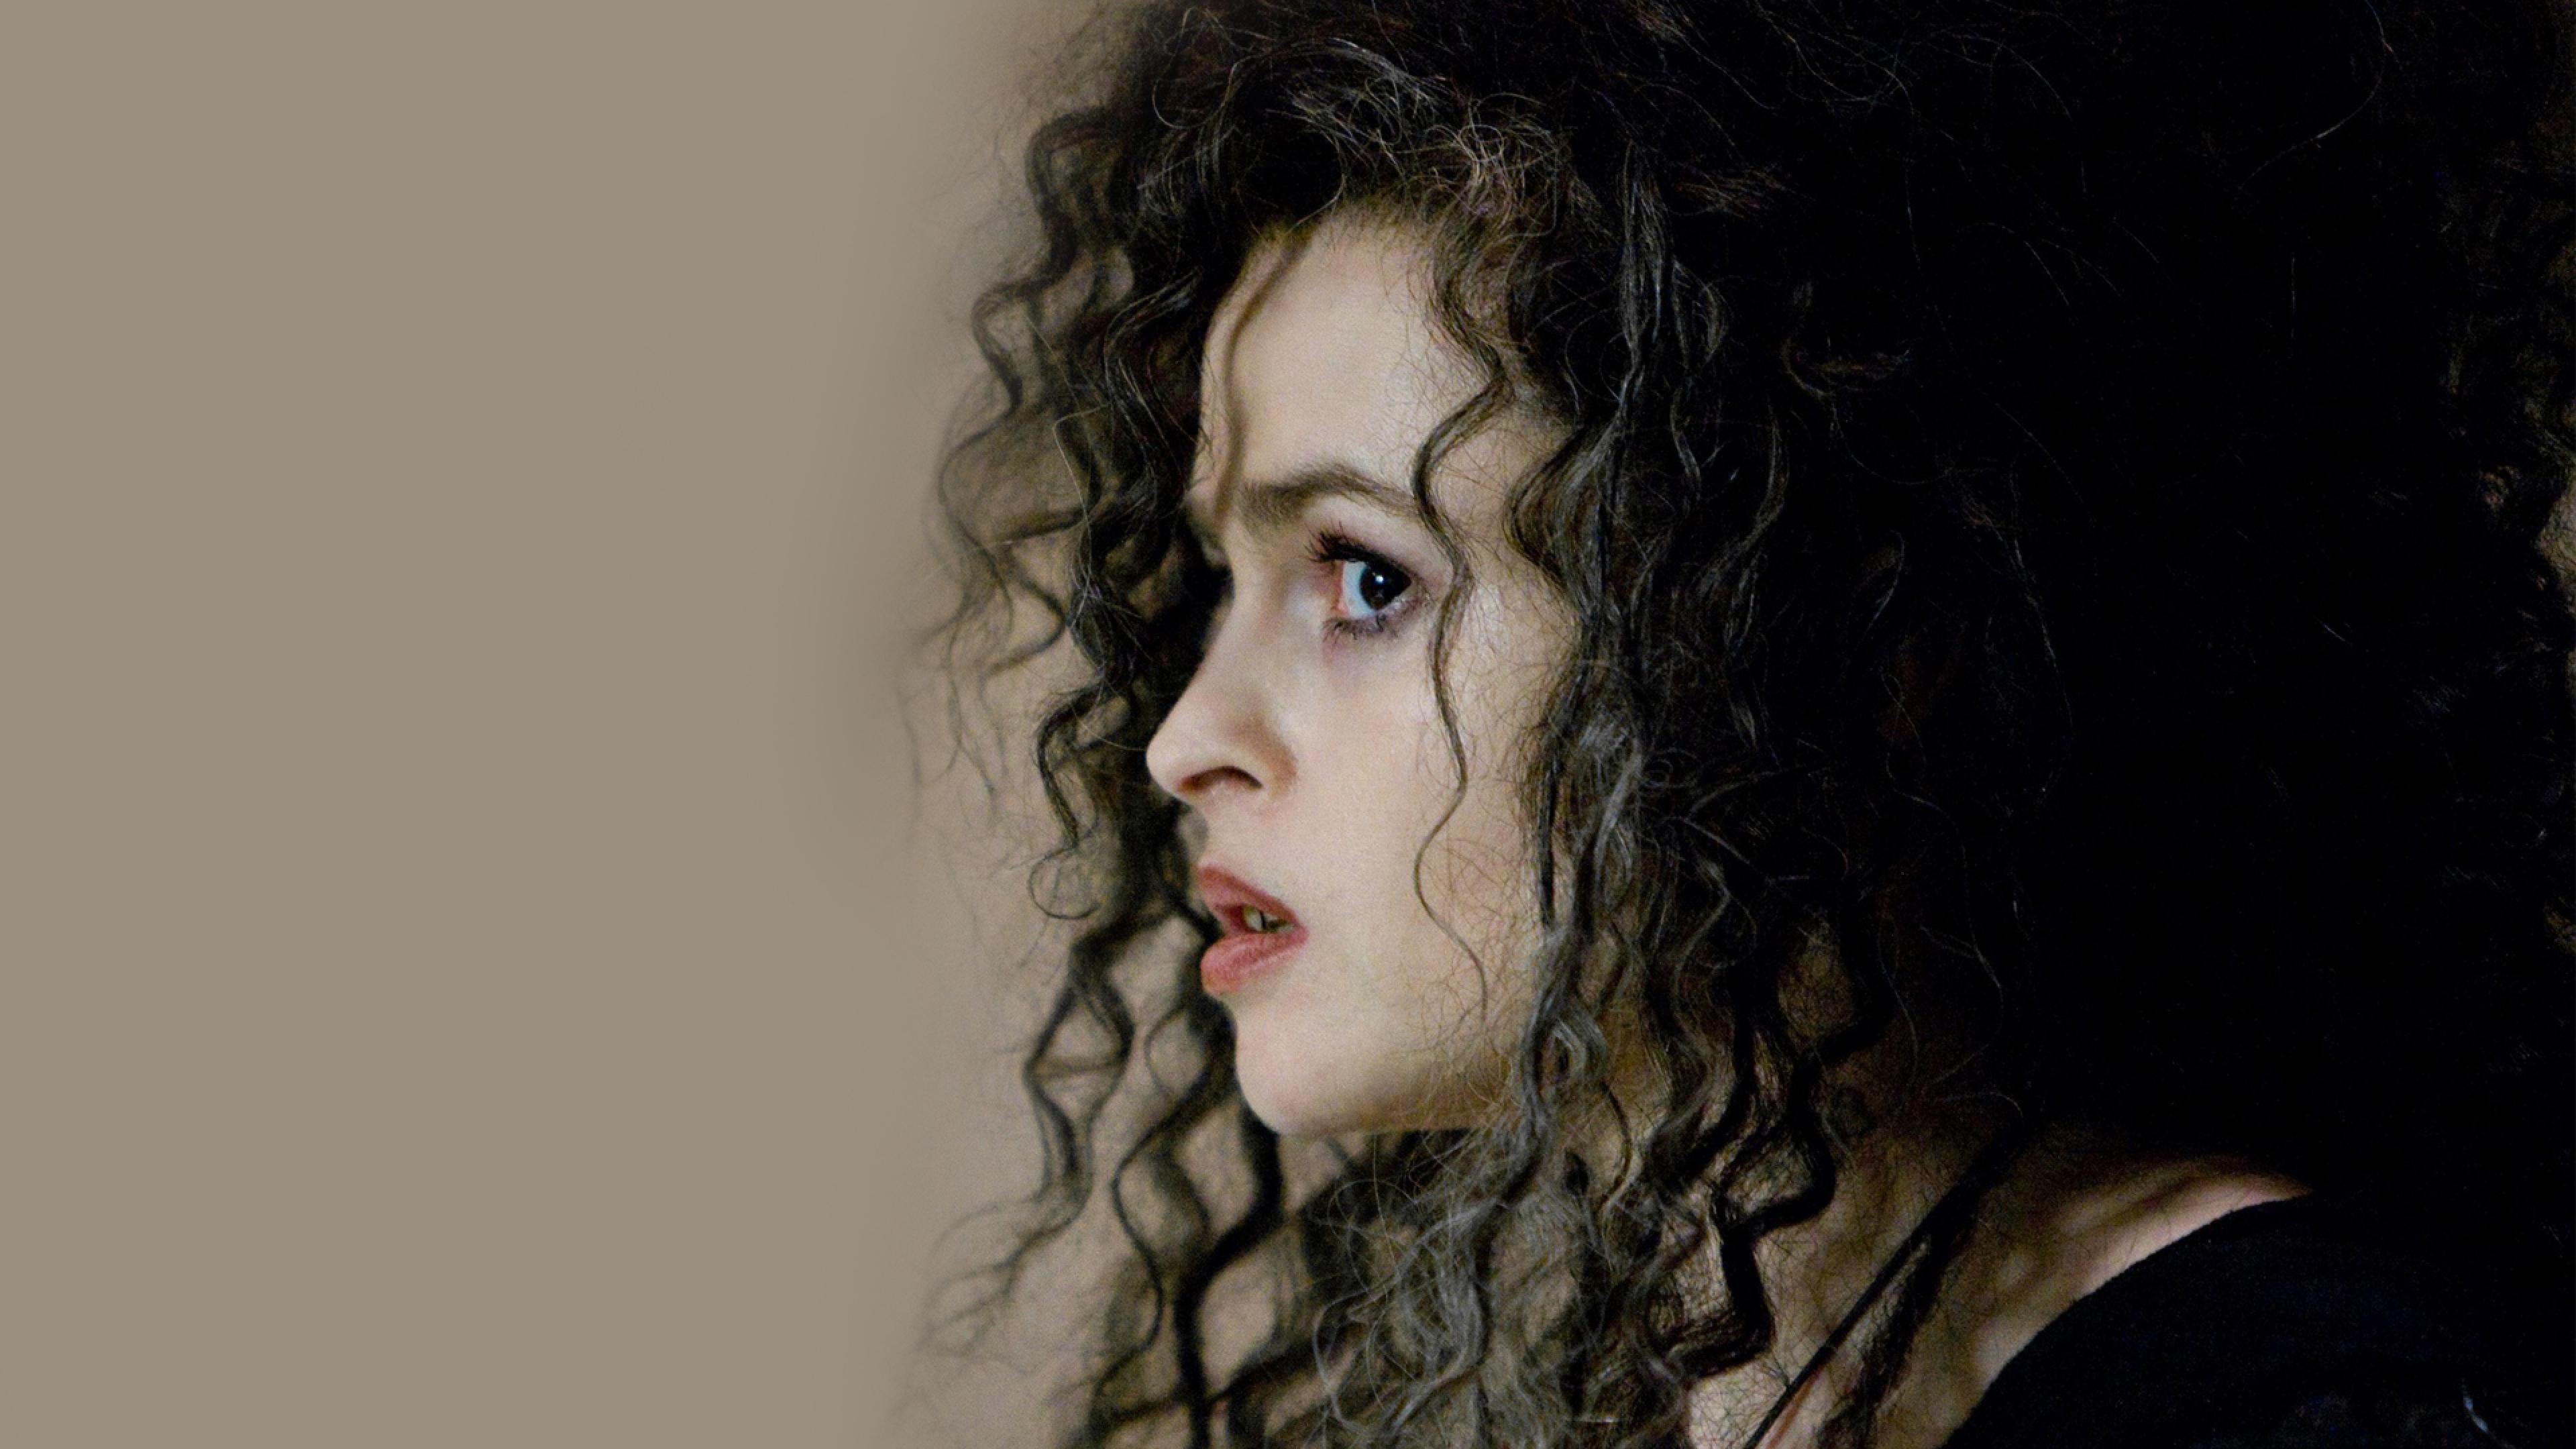 Helena Bonham Carter Anger Image 4K Wallpaper, HD